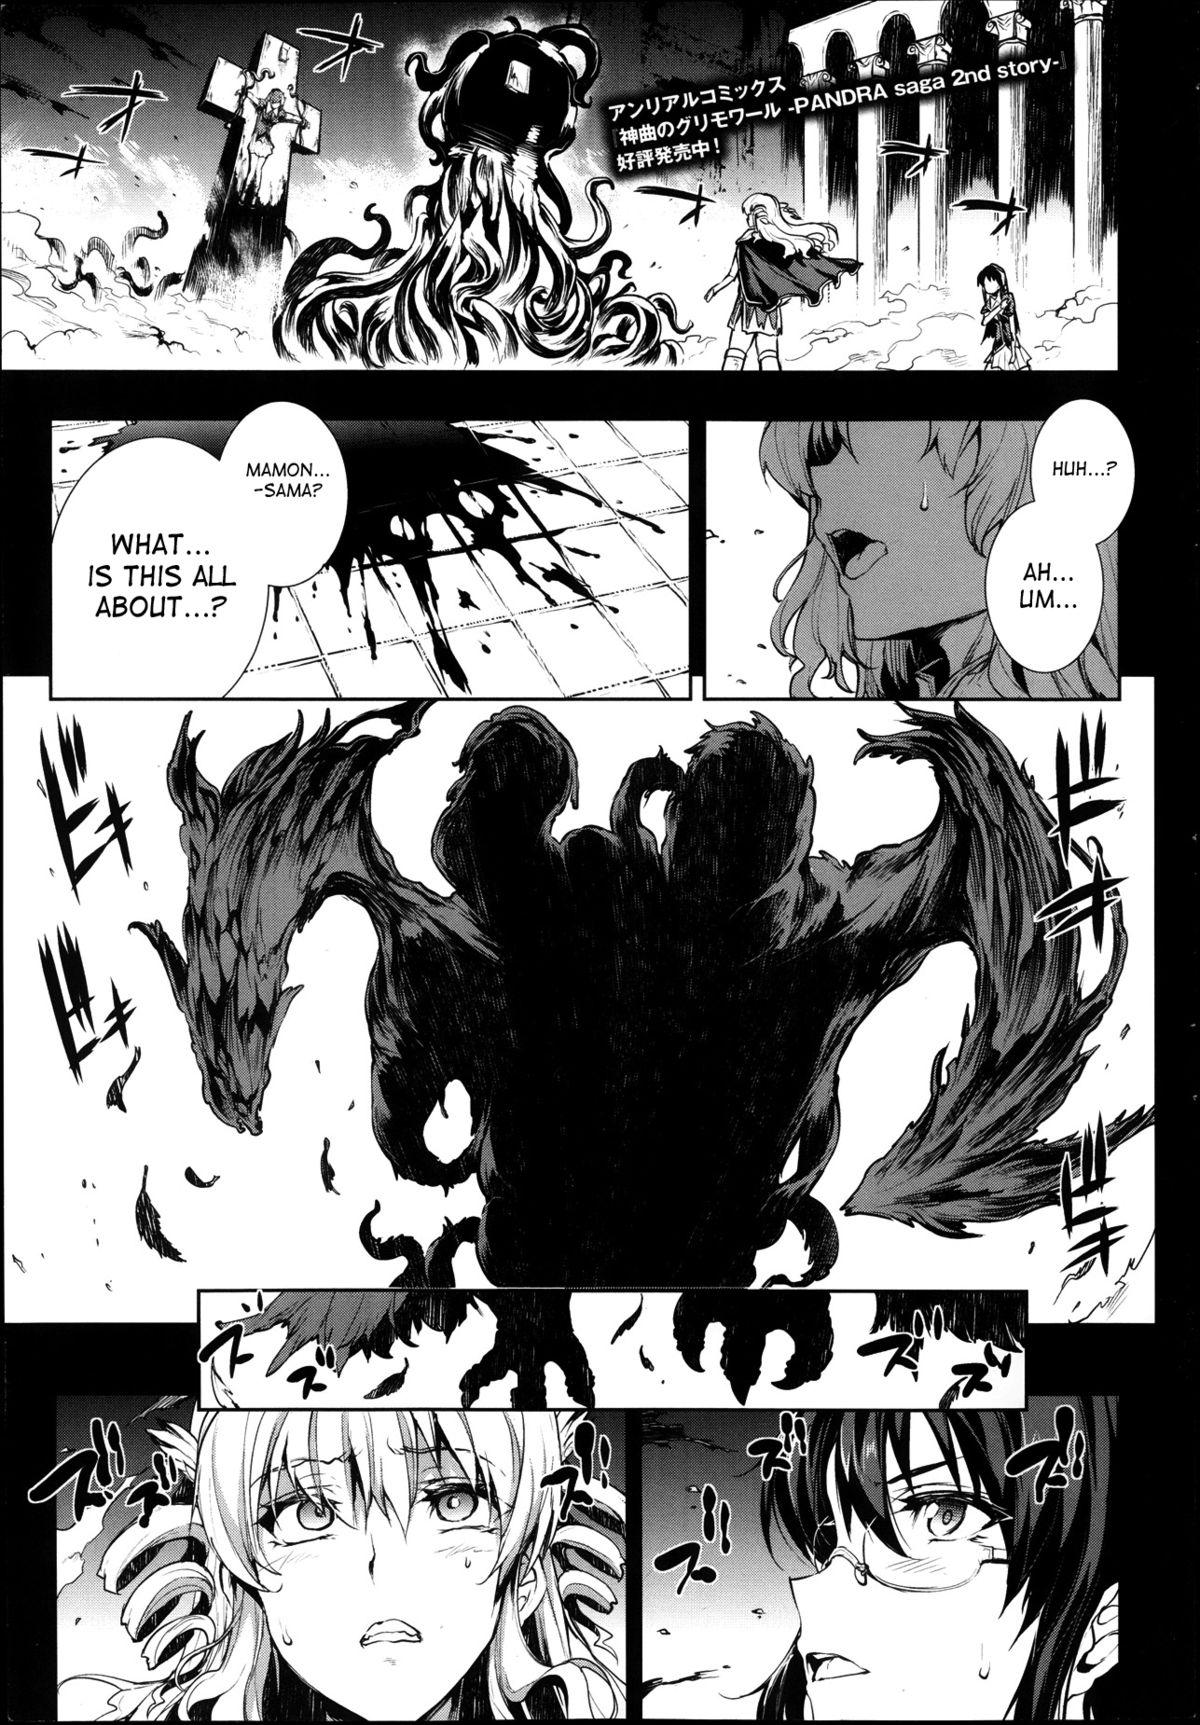 [Erect Sawaru] Shinkyoku no Grimoire -PANDRA saga 2nd story- Ch. 1-16 + Side Story x 3 [English] [SaHa] 248